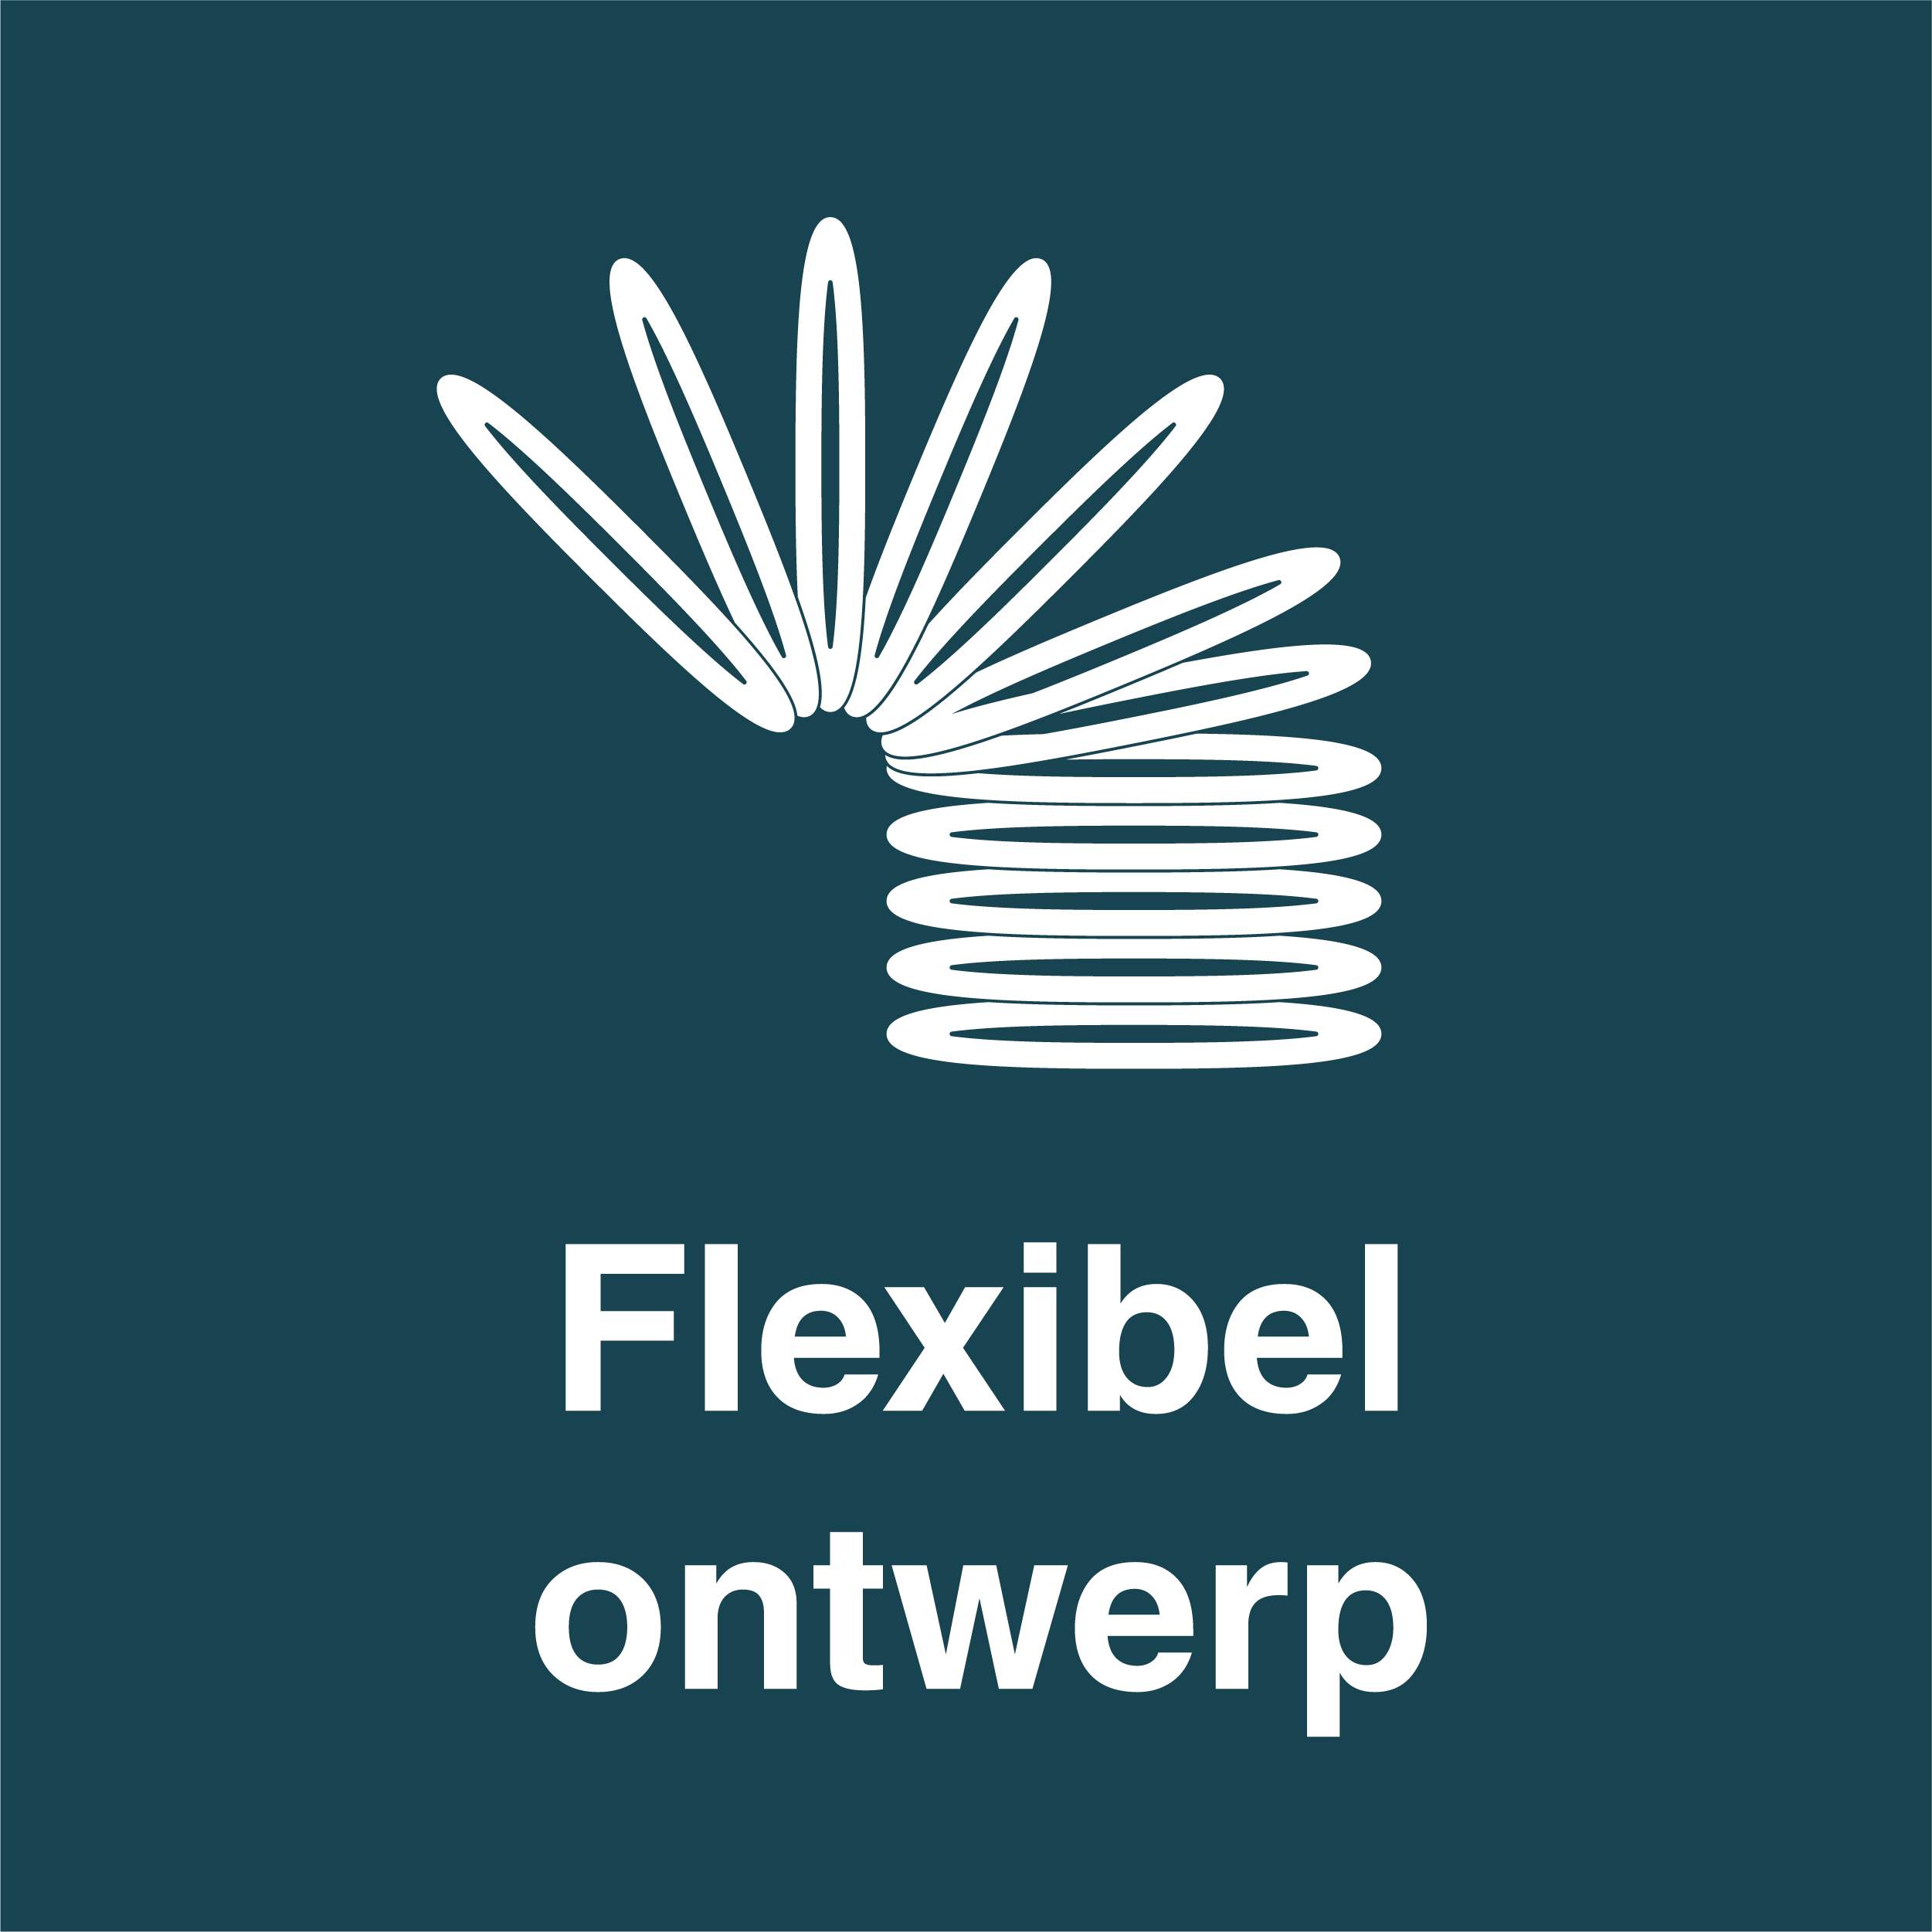 flexible design icon